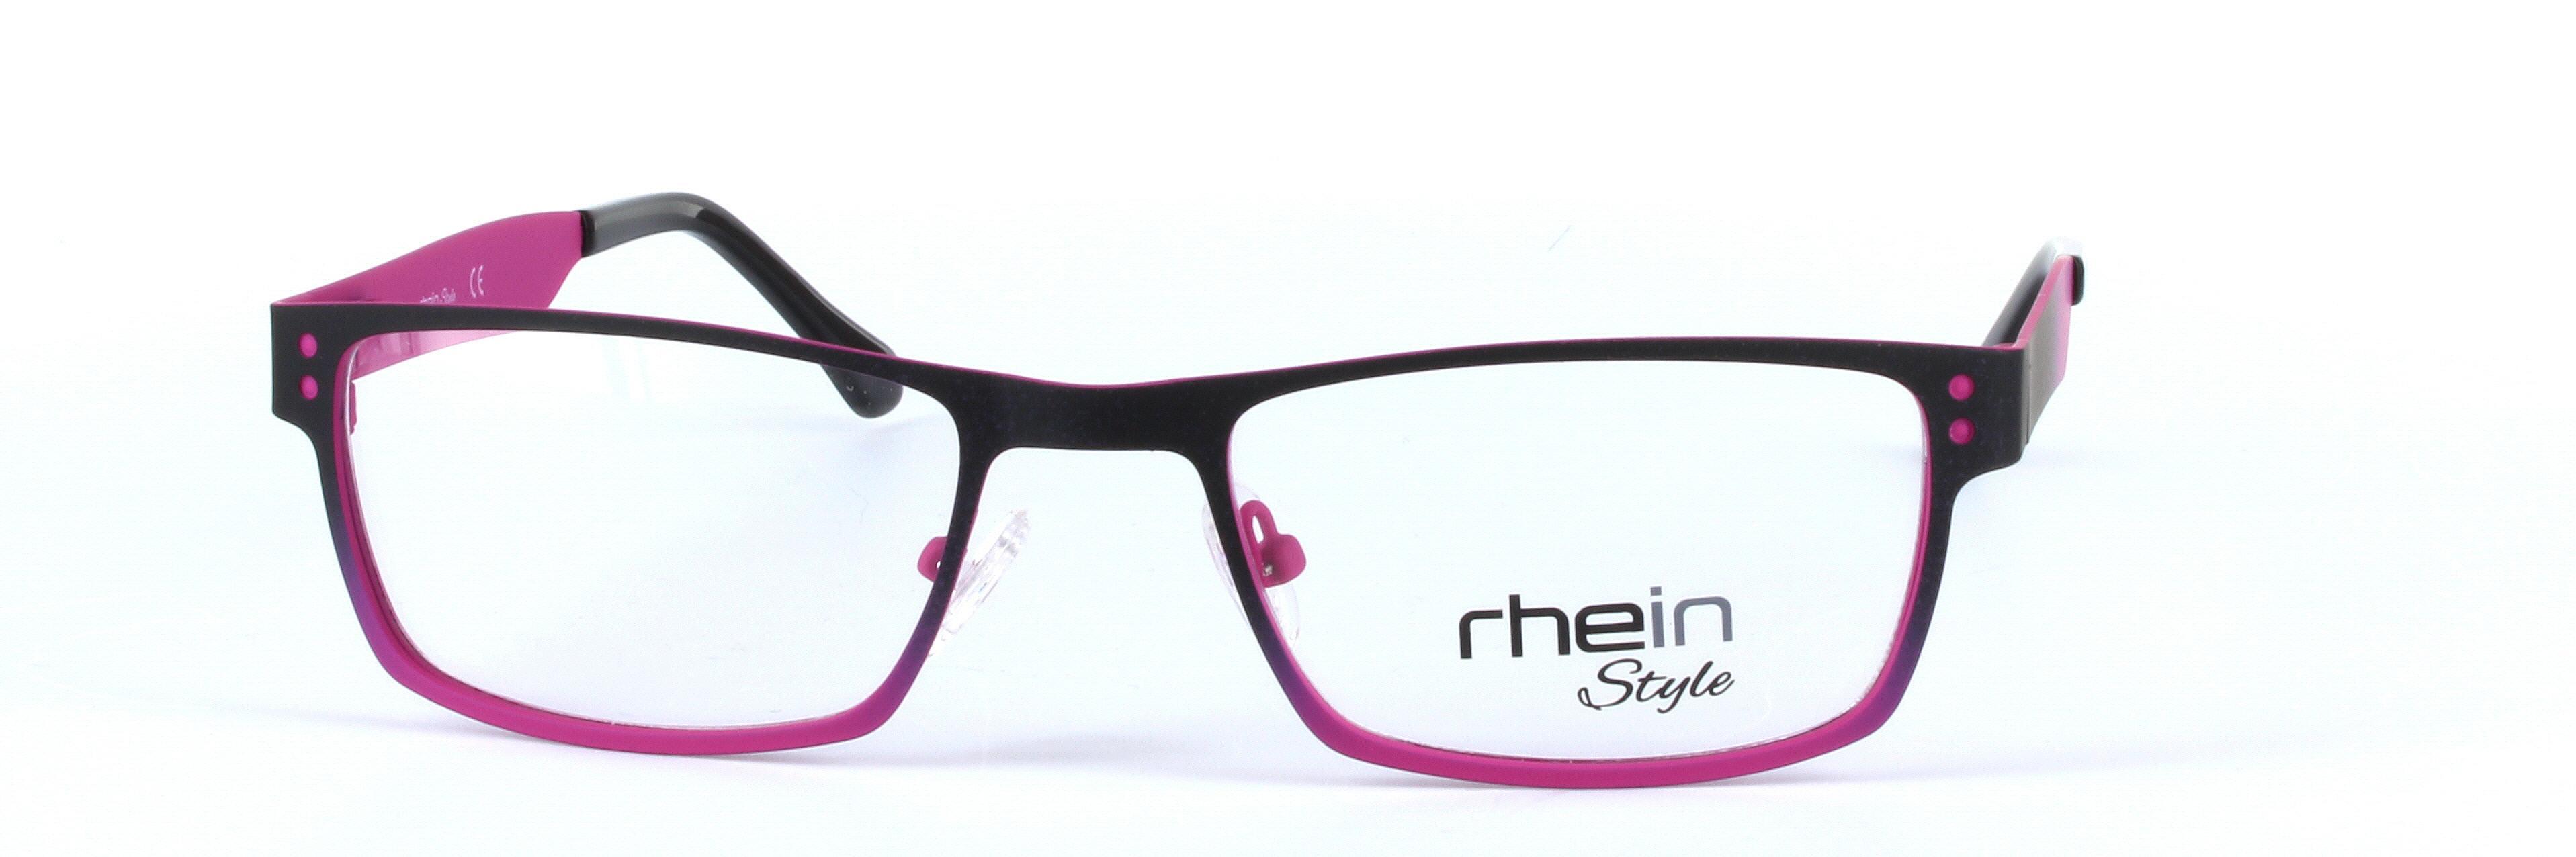 Ambleside Black and Pink Full Rim Rectangular Metal Glasses - Image View 5